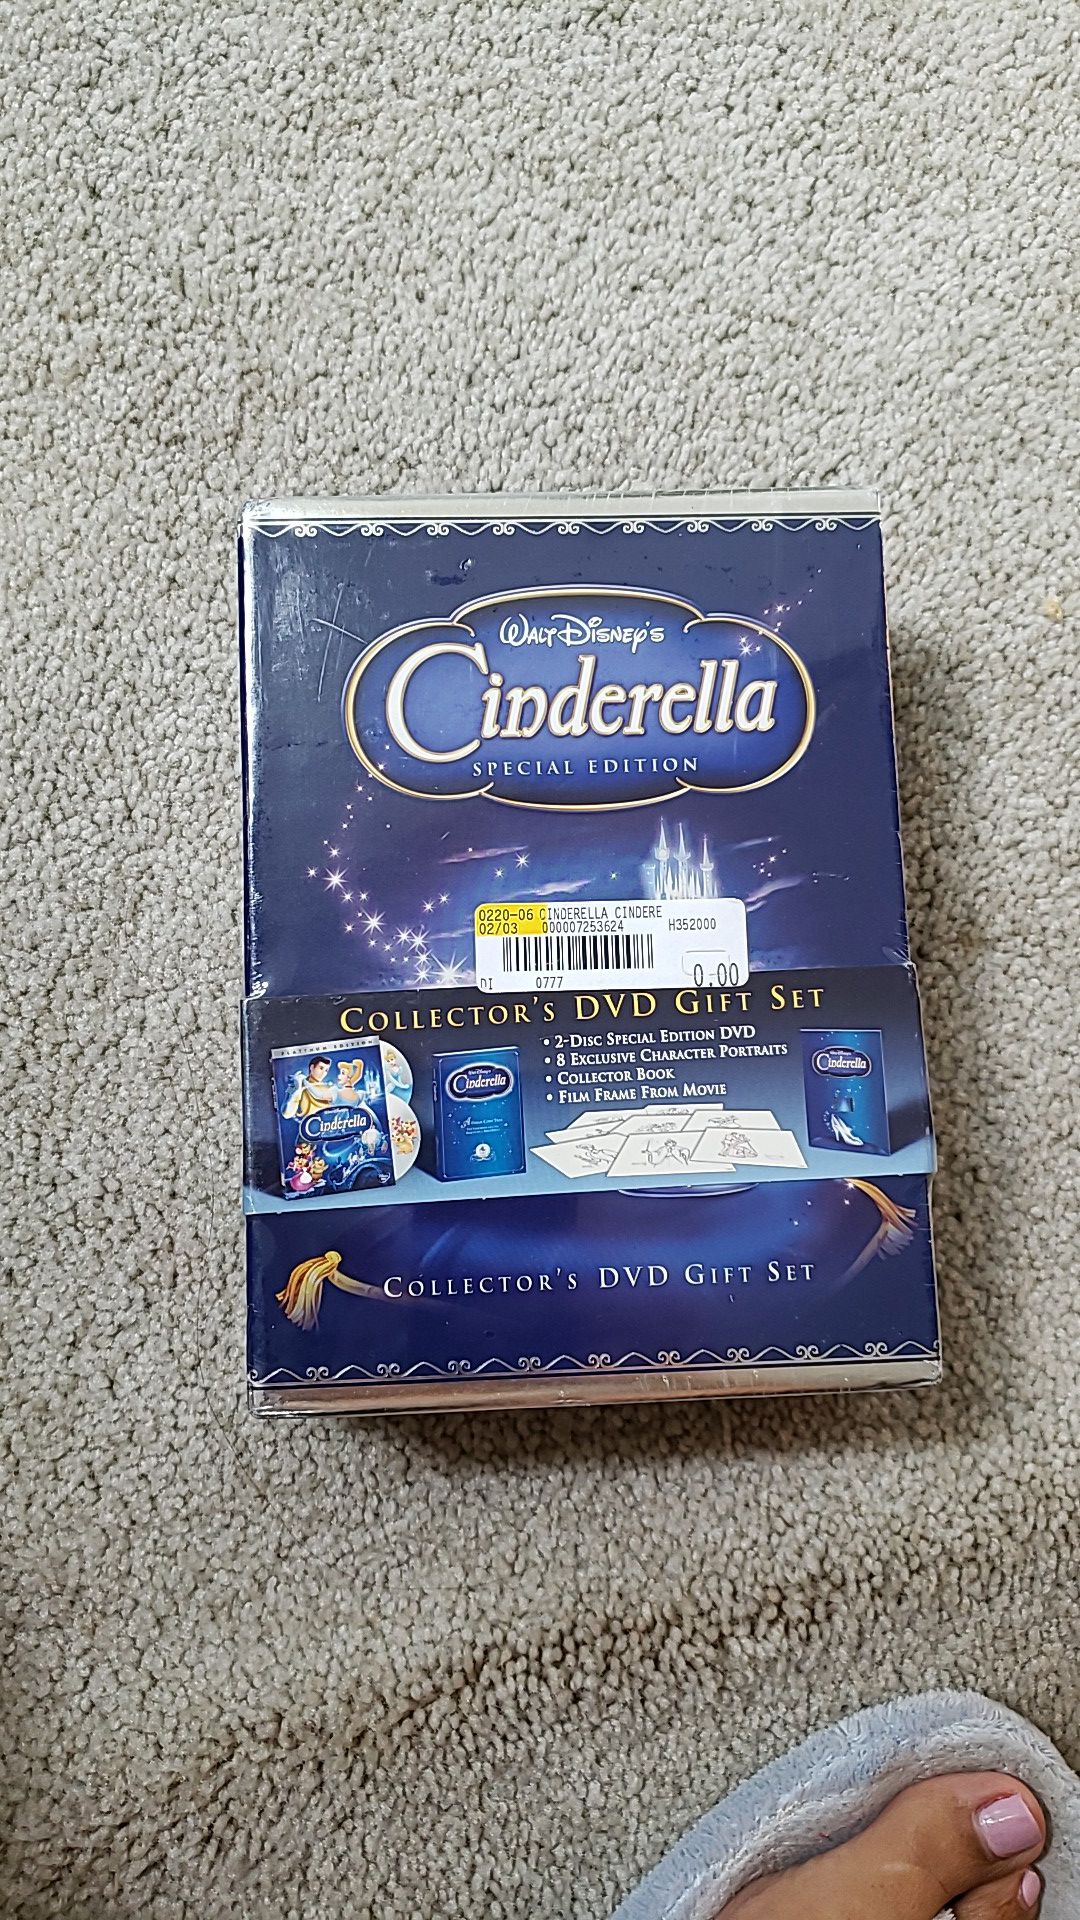 Cinderella Special Edition DVD Gift Set